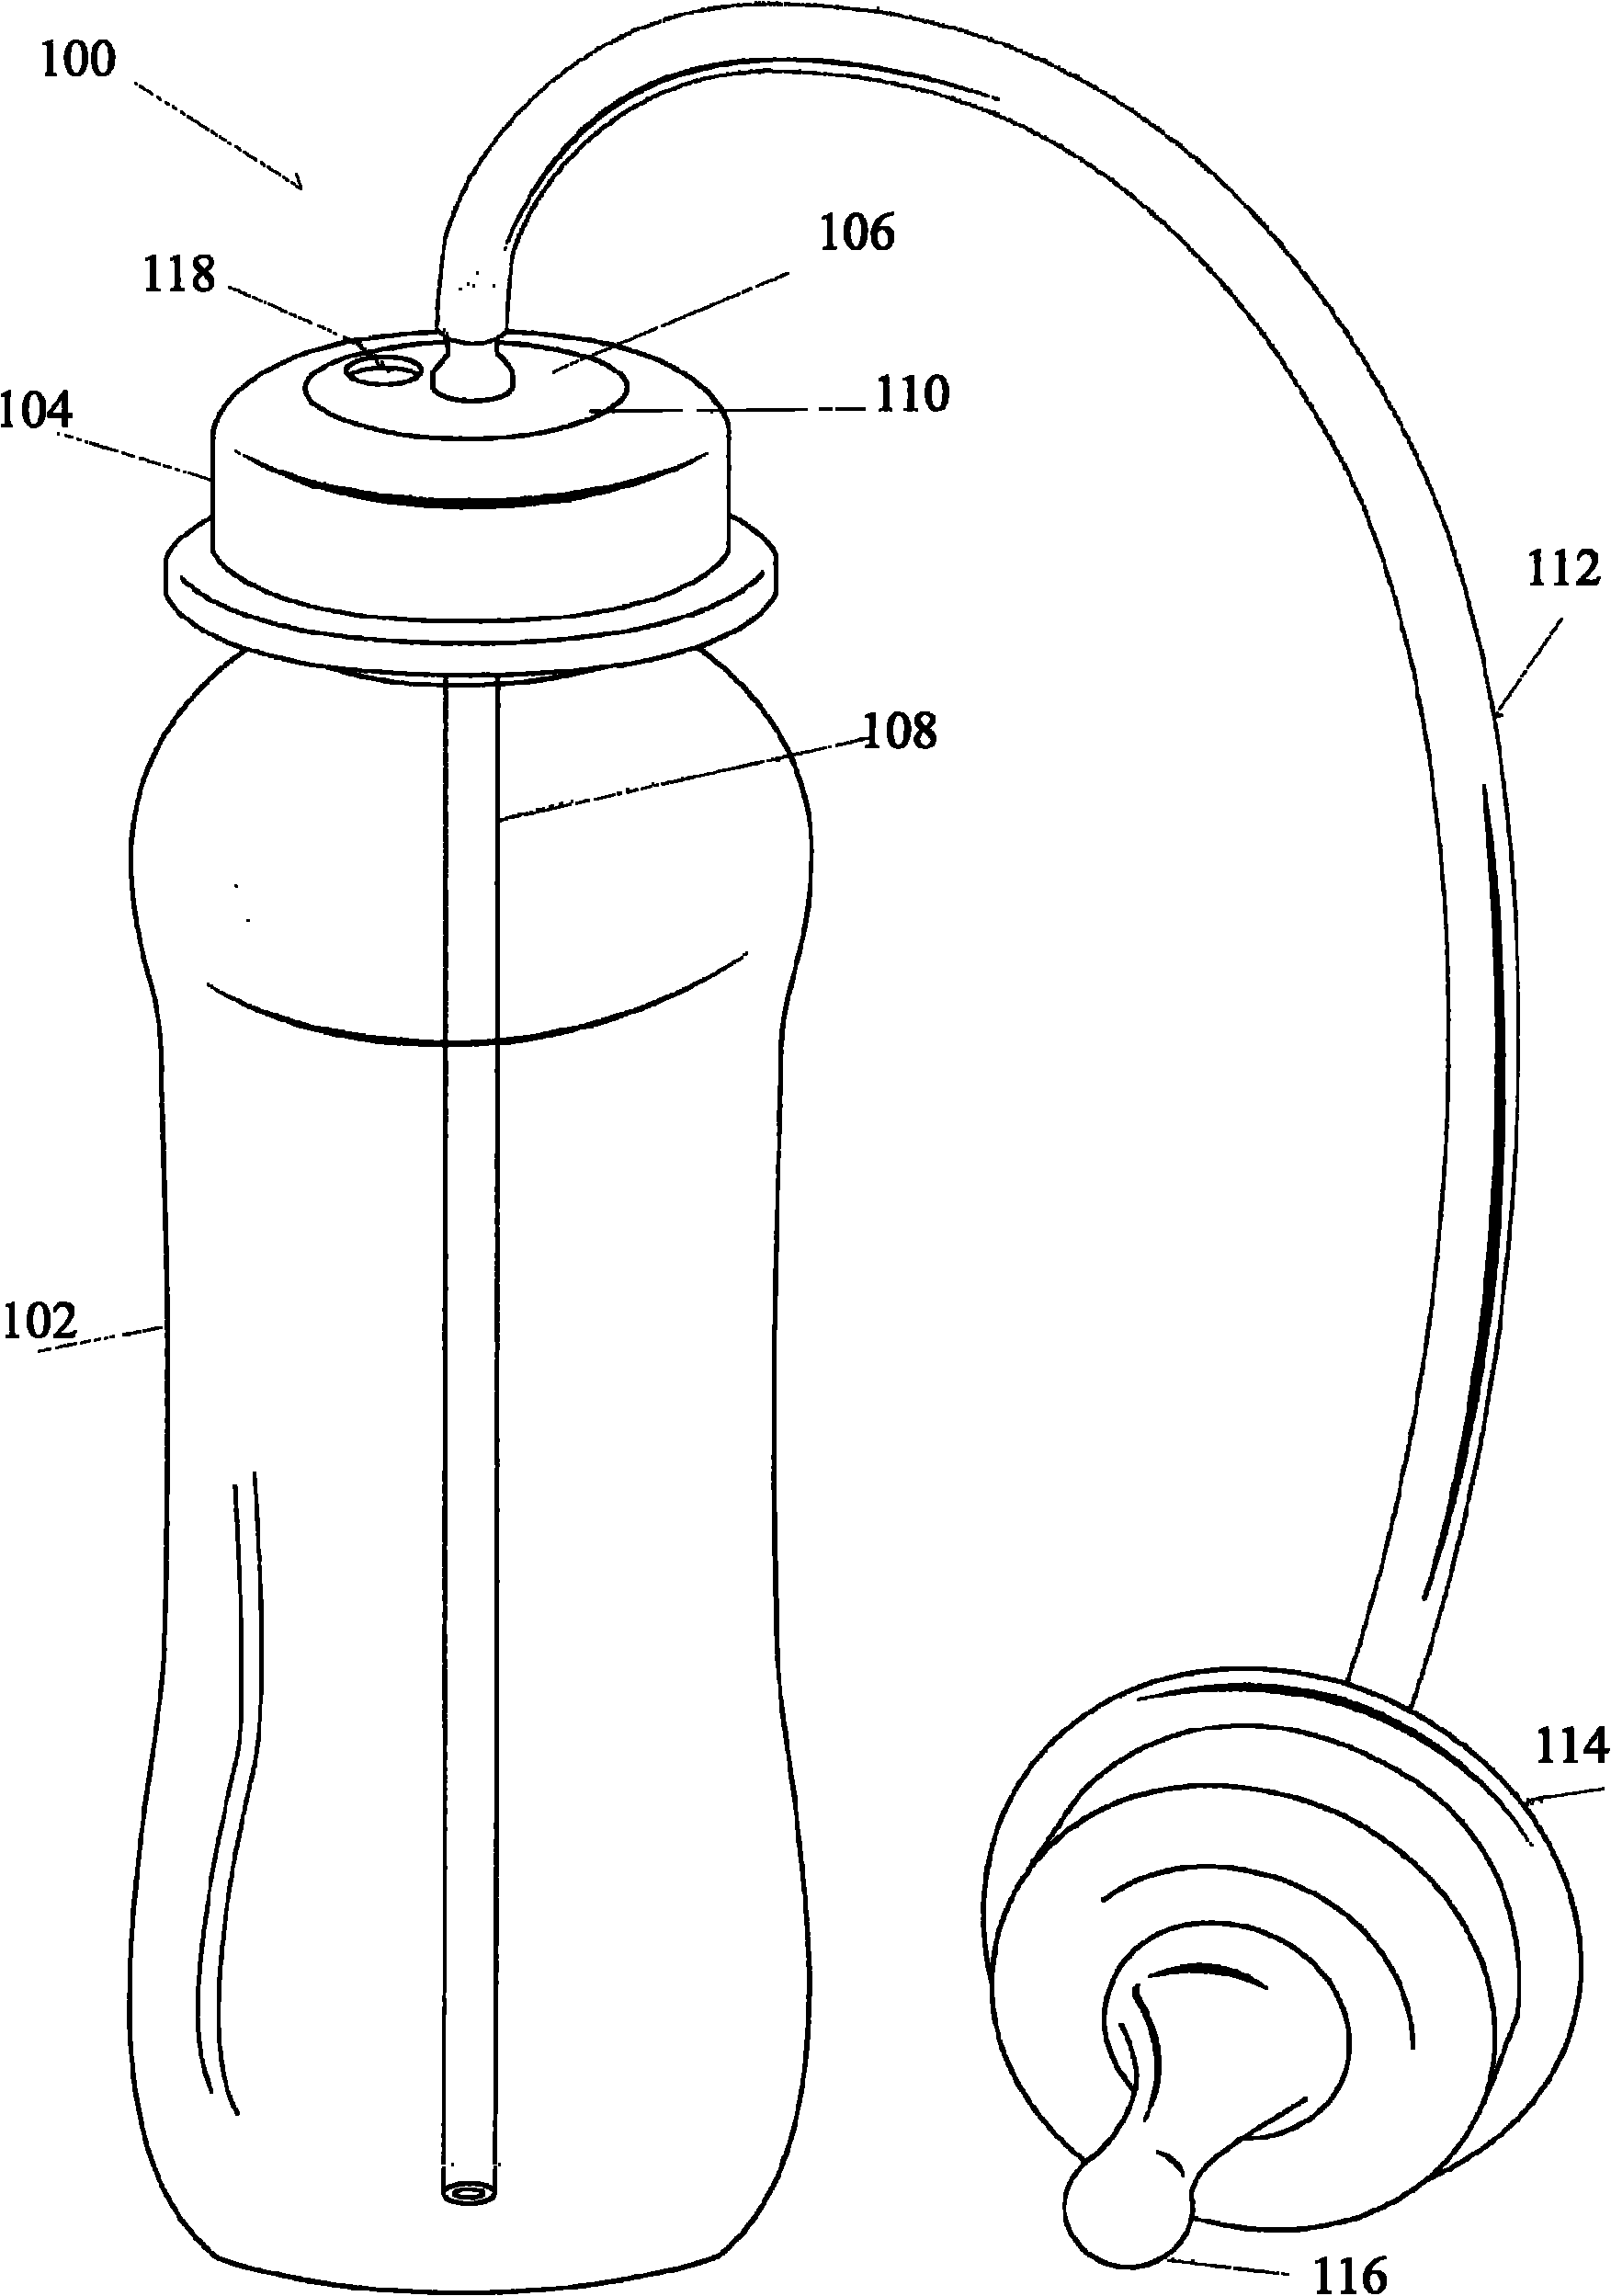 Modular feeding bottle